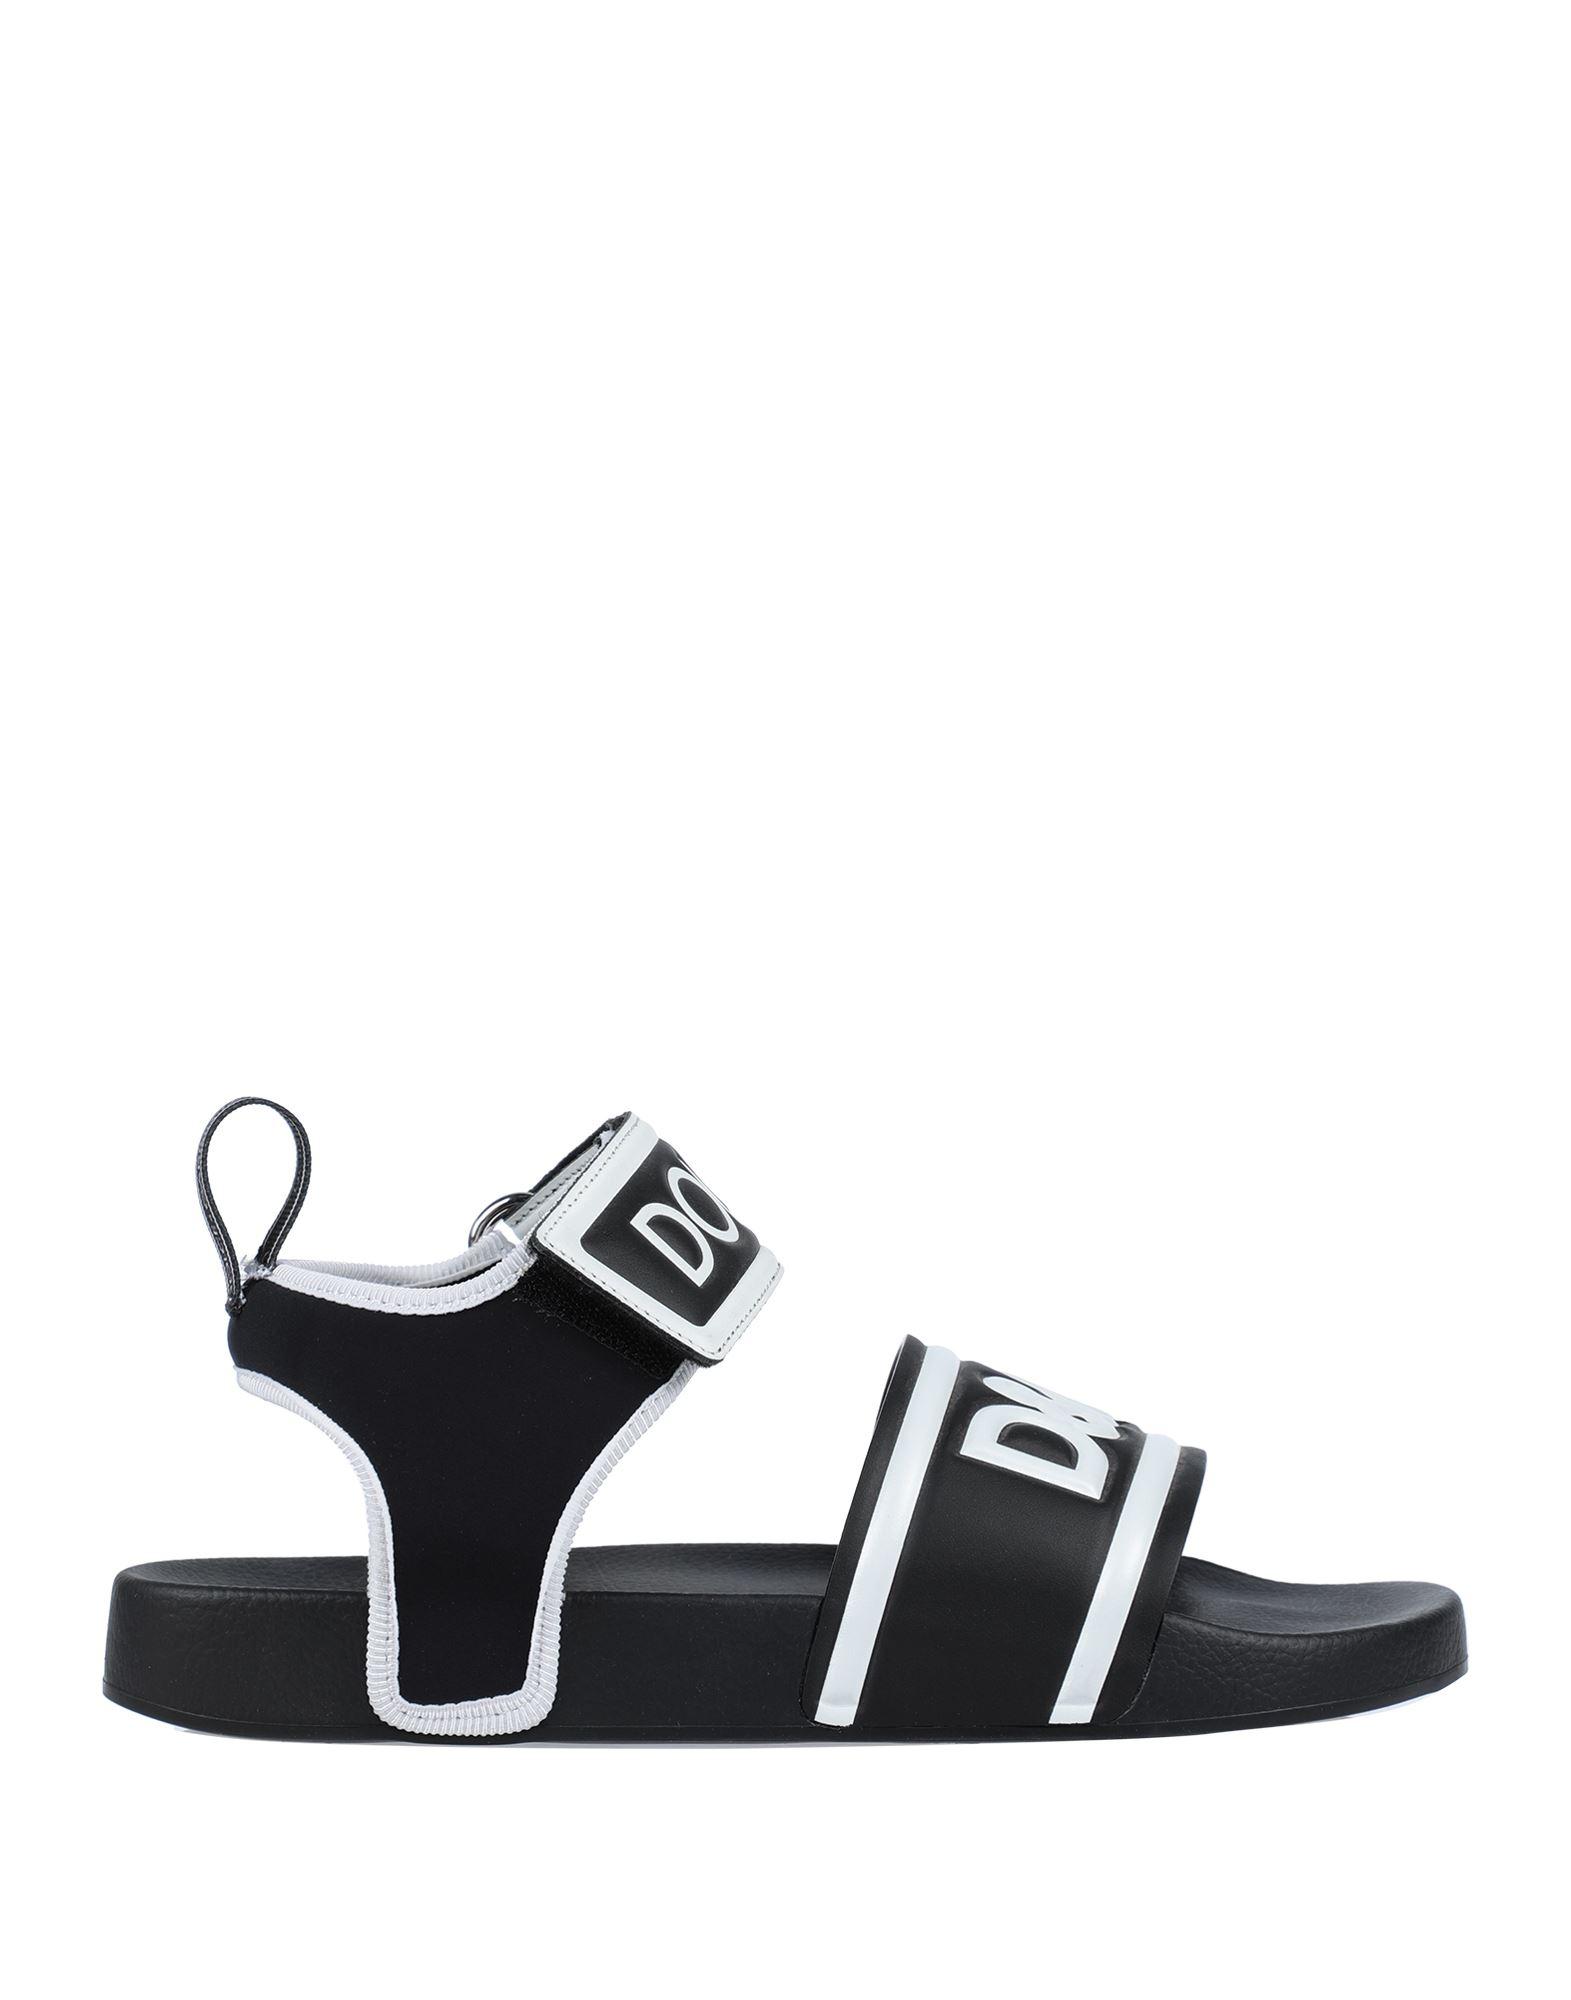 Dolce & Gabbana Rubber Sandals in Black for Men - Lyst